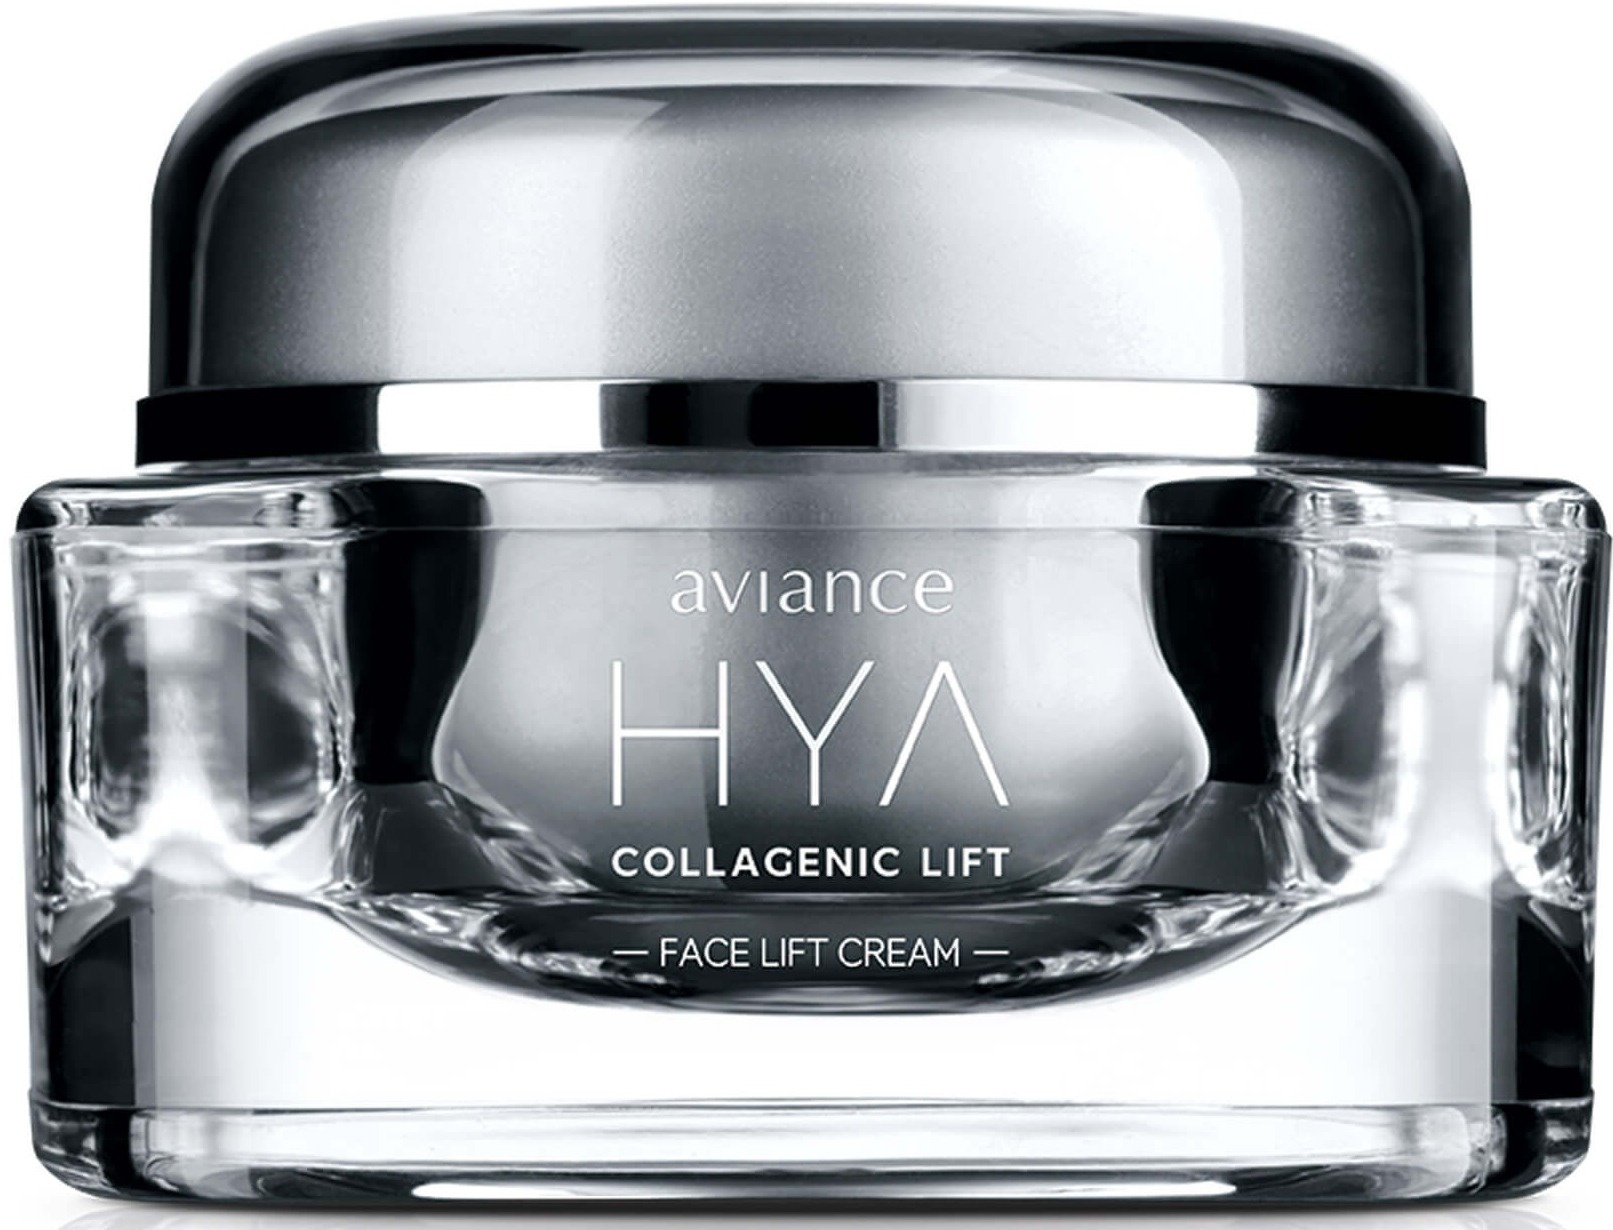 aviance Hya Collagenic Lift Face Lift Cream